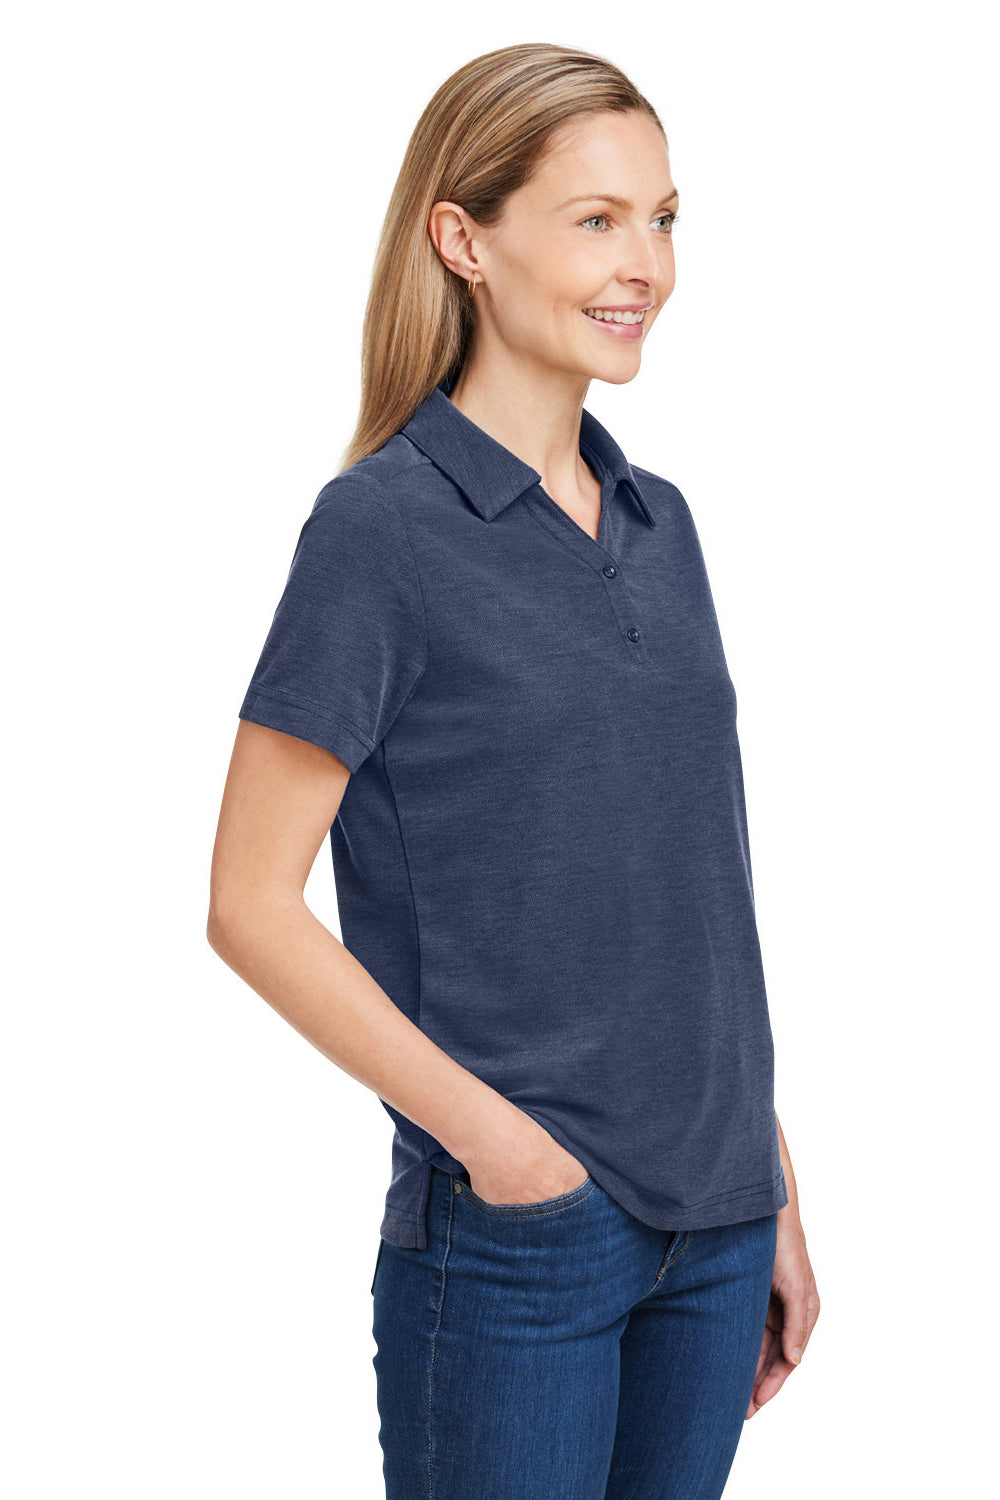 Core 365 CE112W Womens Fusion ChromaSoft Performance Moisture Wicking Pique Short Sleeve Polo Shirt Heather Classic Navy Blue 3Q